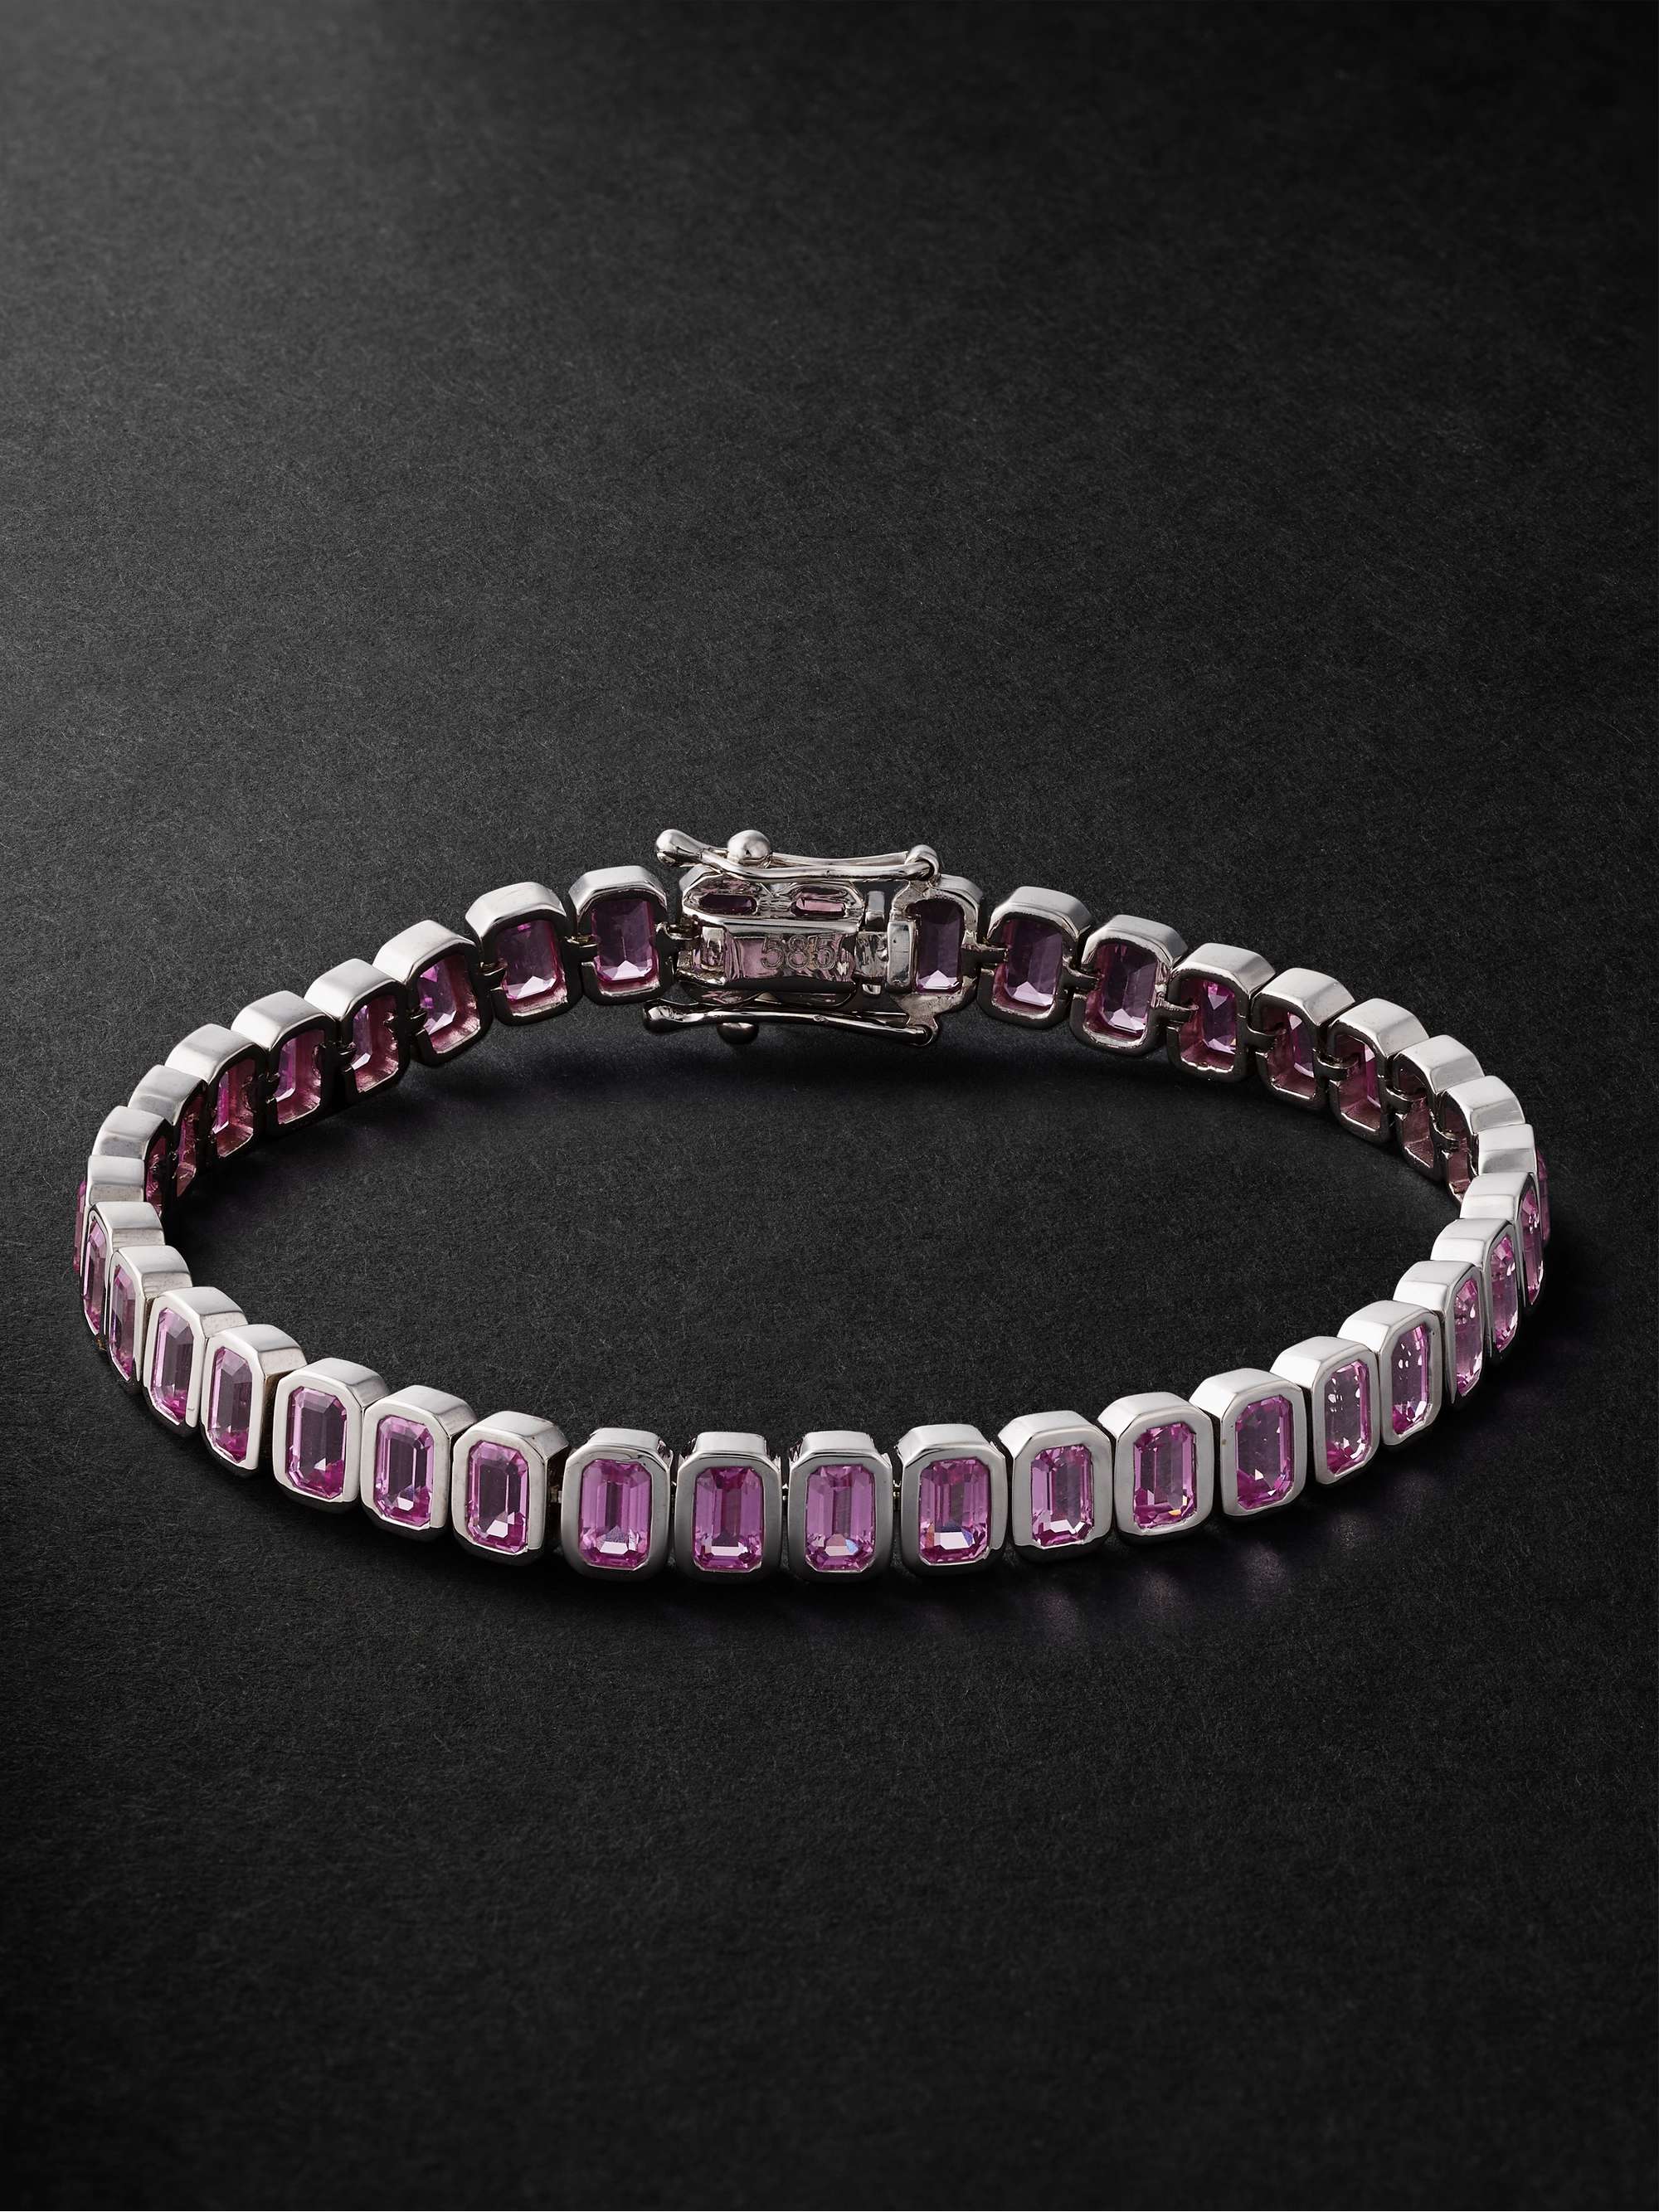 42 SUNS 14-Karat White Gold Pink Sapphire Tennis Bracelet